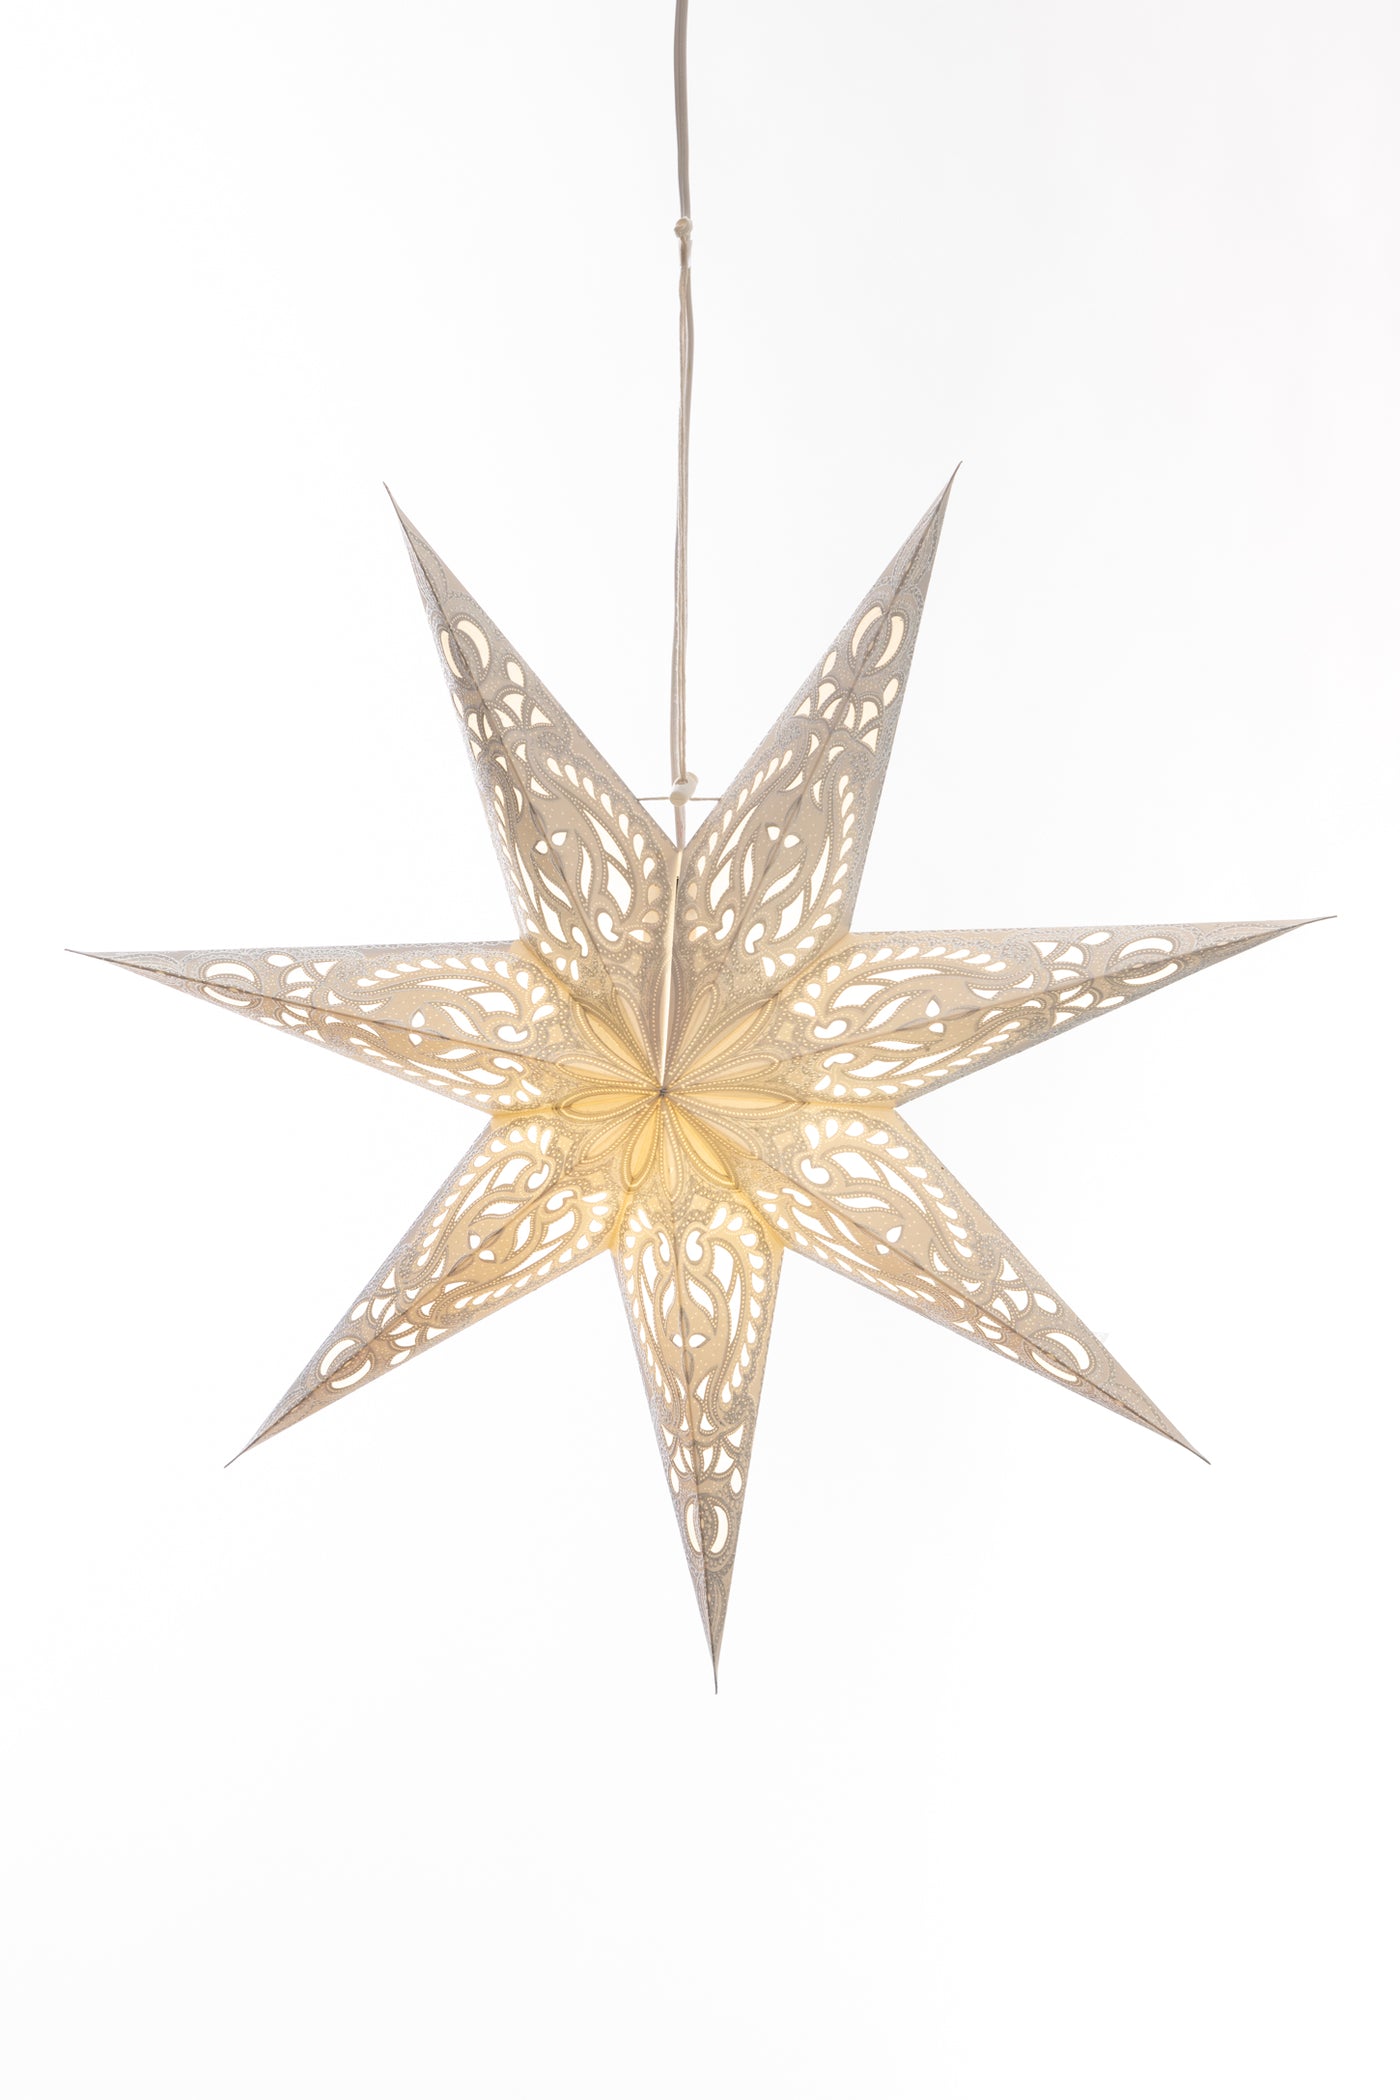  Paper Star Lantern Decoration (Cosmic White 7-Point